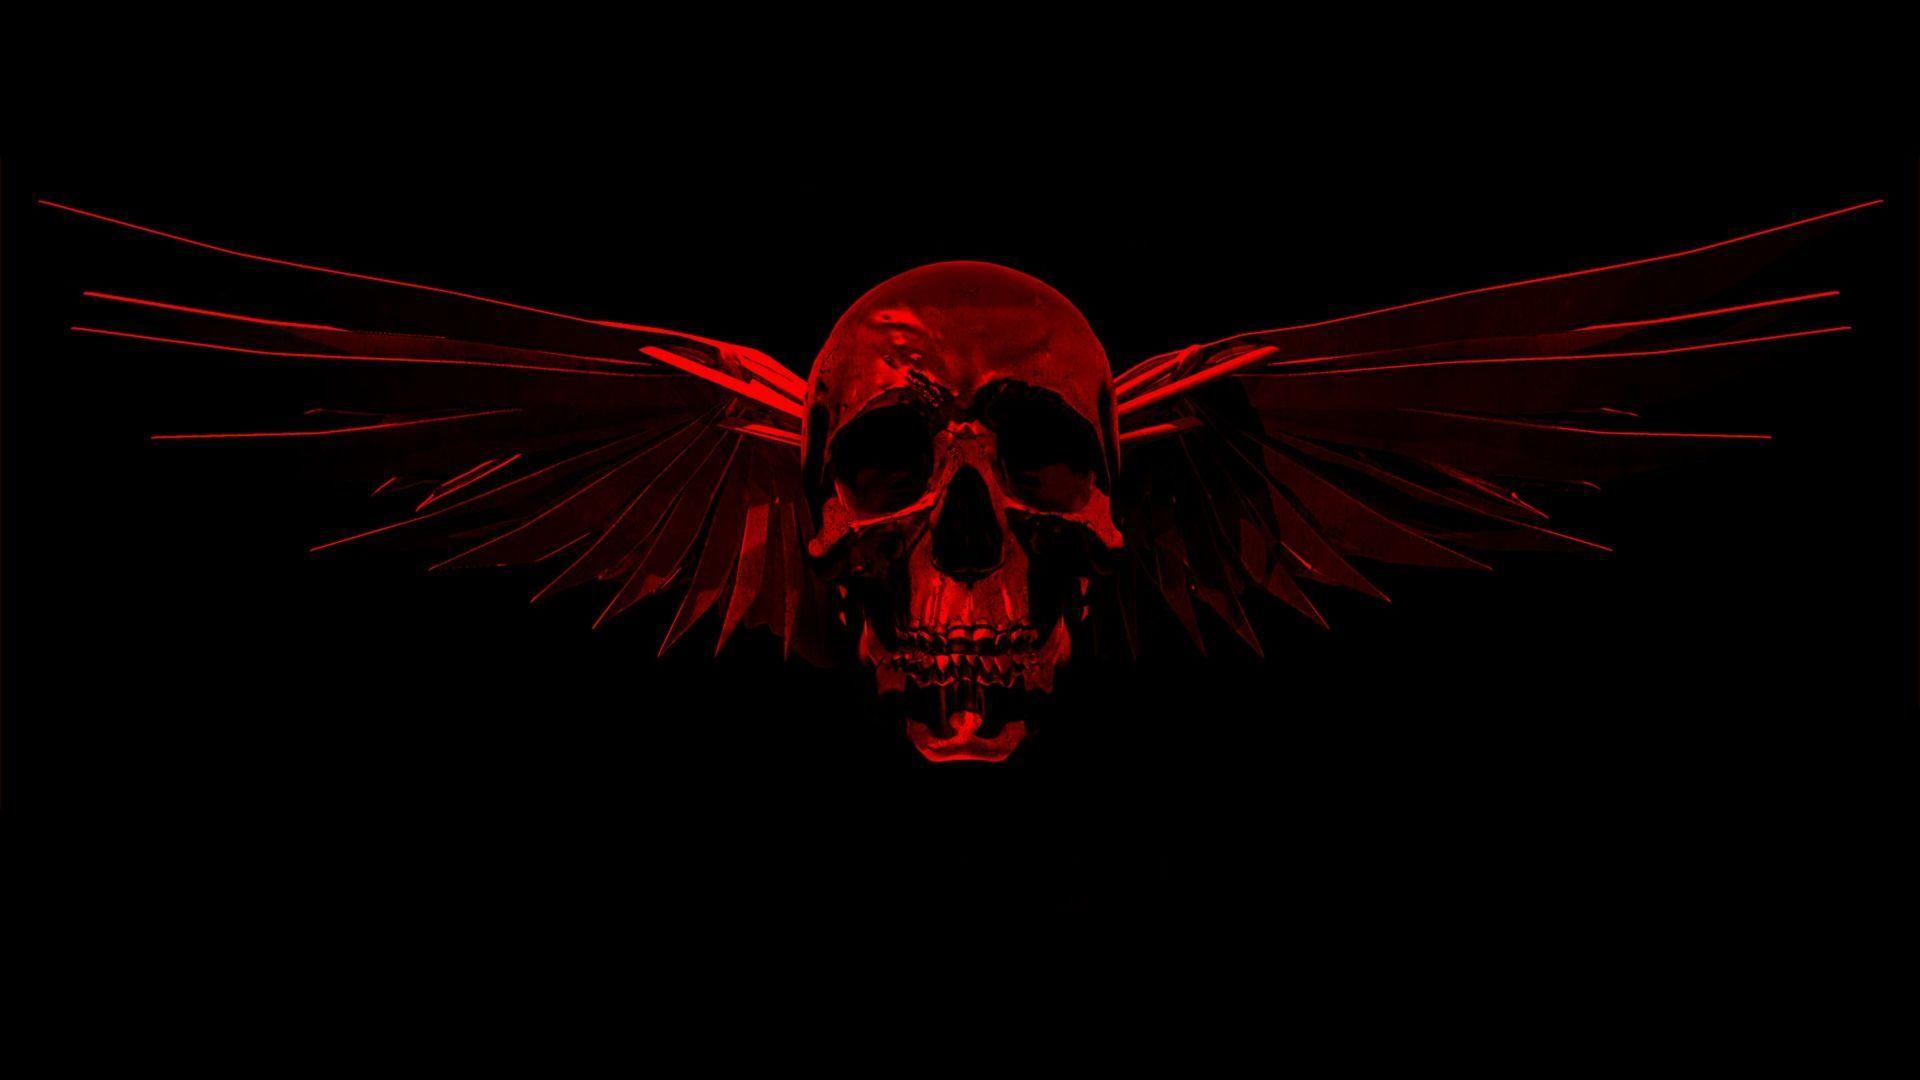 Download wallpaper 1350x2400 skull dark red black darkness iphone  876s6 for parallax hd background